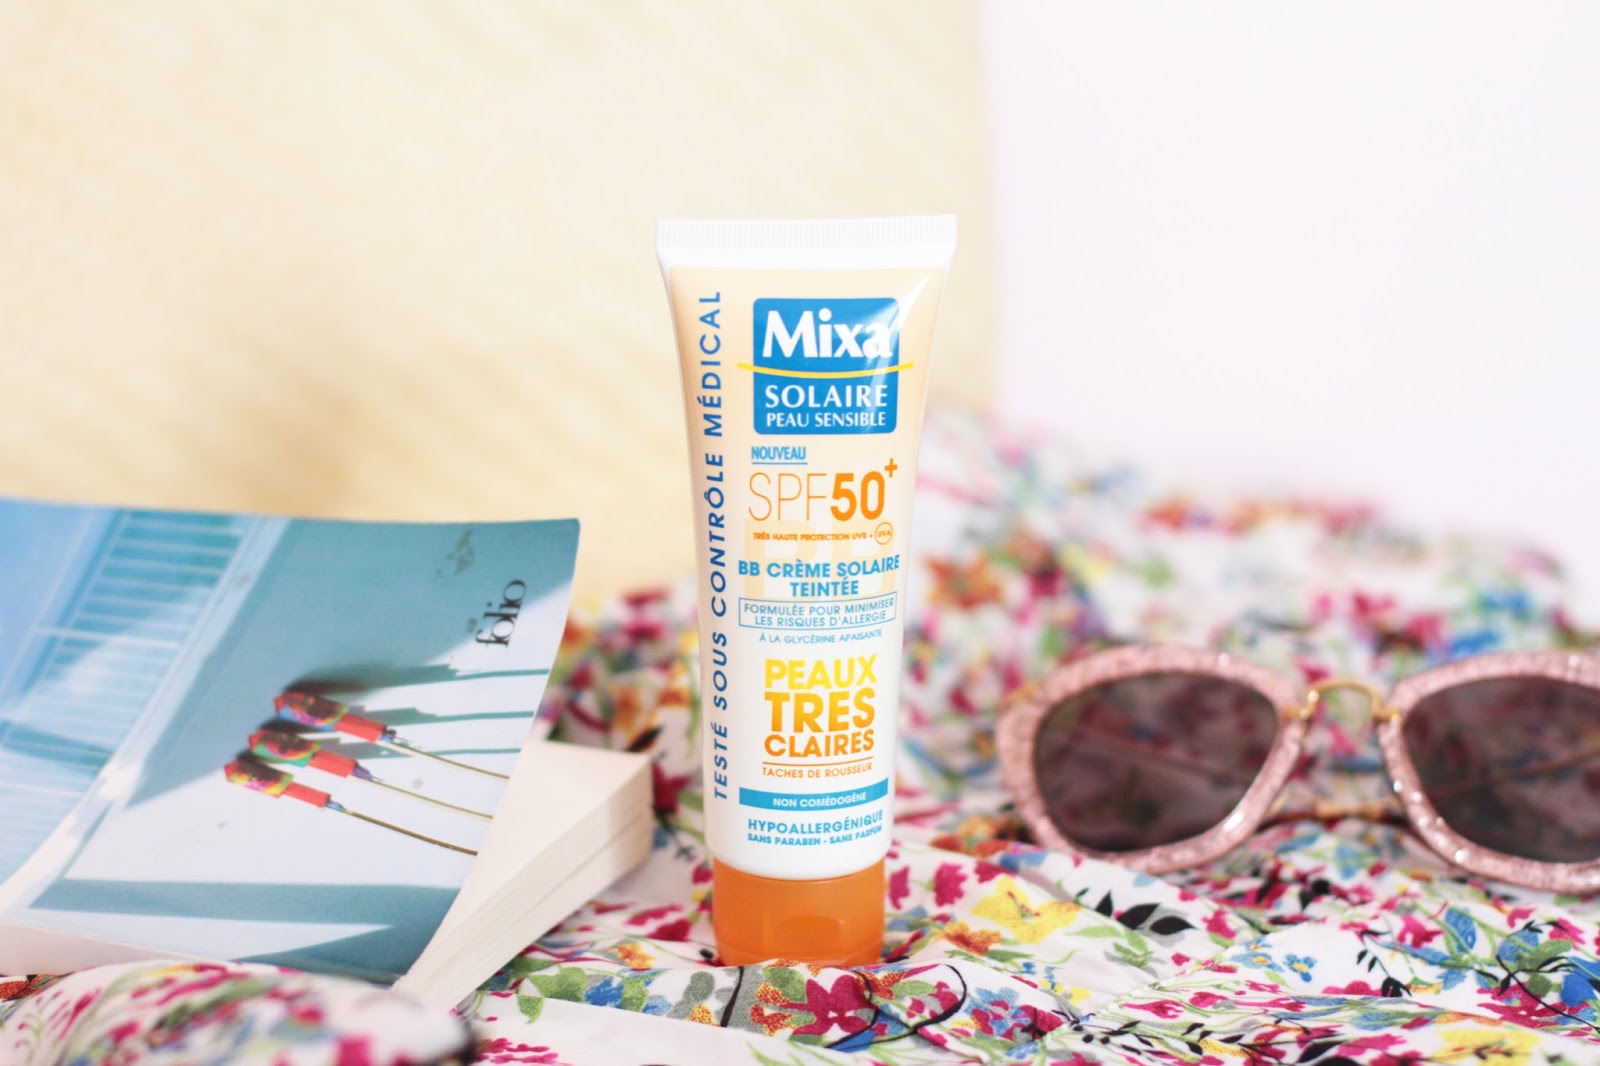 Mixa BB crème solaire teintée SPF 50 +